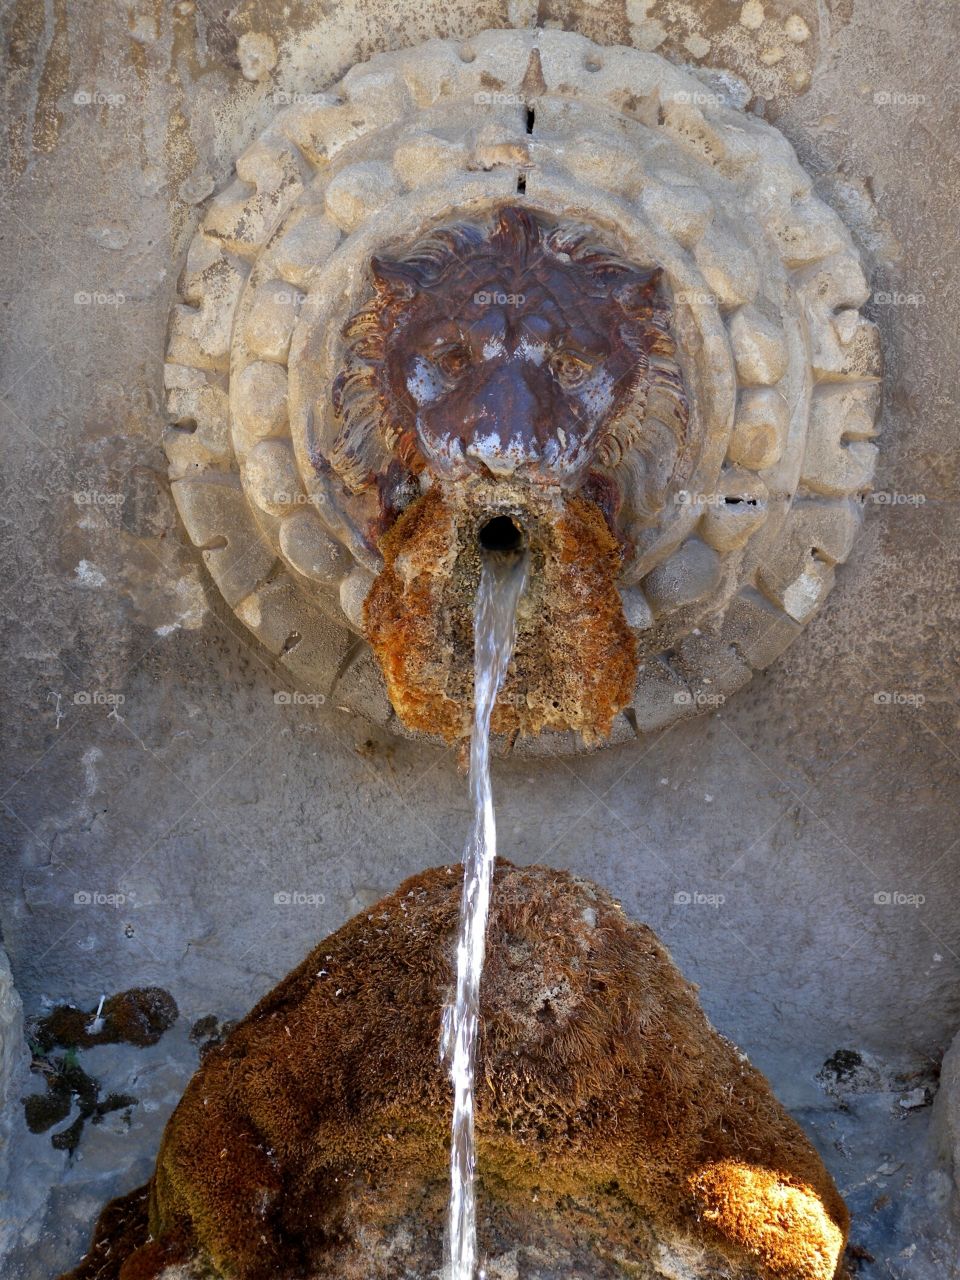 Löwen-Brunnen
lions fountain